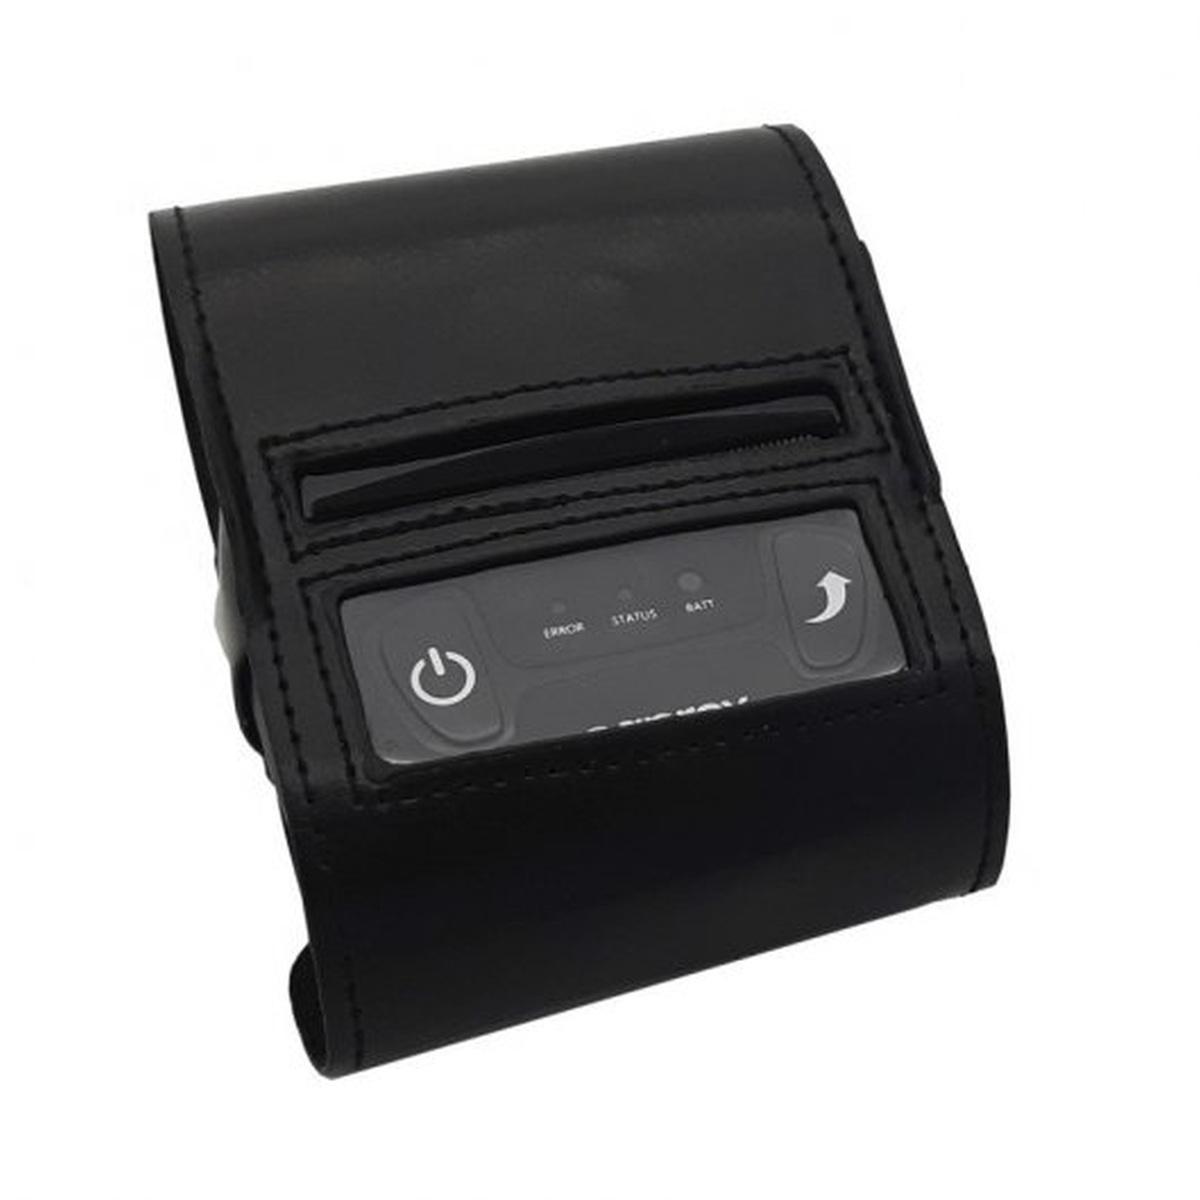 Stampante termica portatile APPROX per ricevute - Bluetooth, RS-232, USB - Risoluzione 203 dpi - Velocità 80 mm/s - Taglio manuale